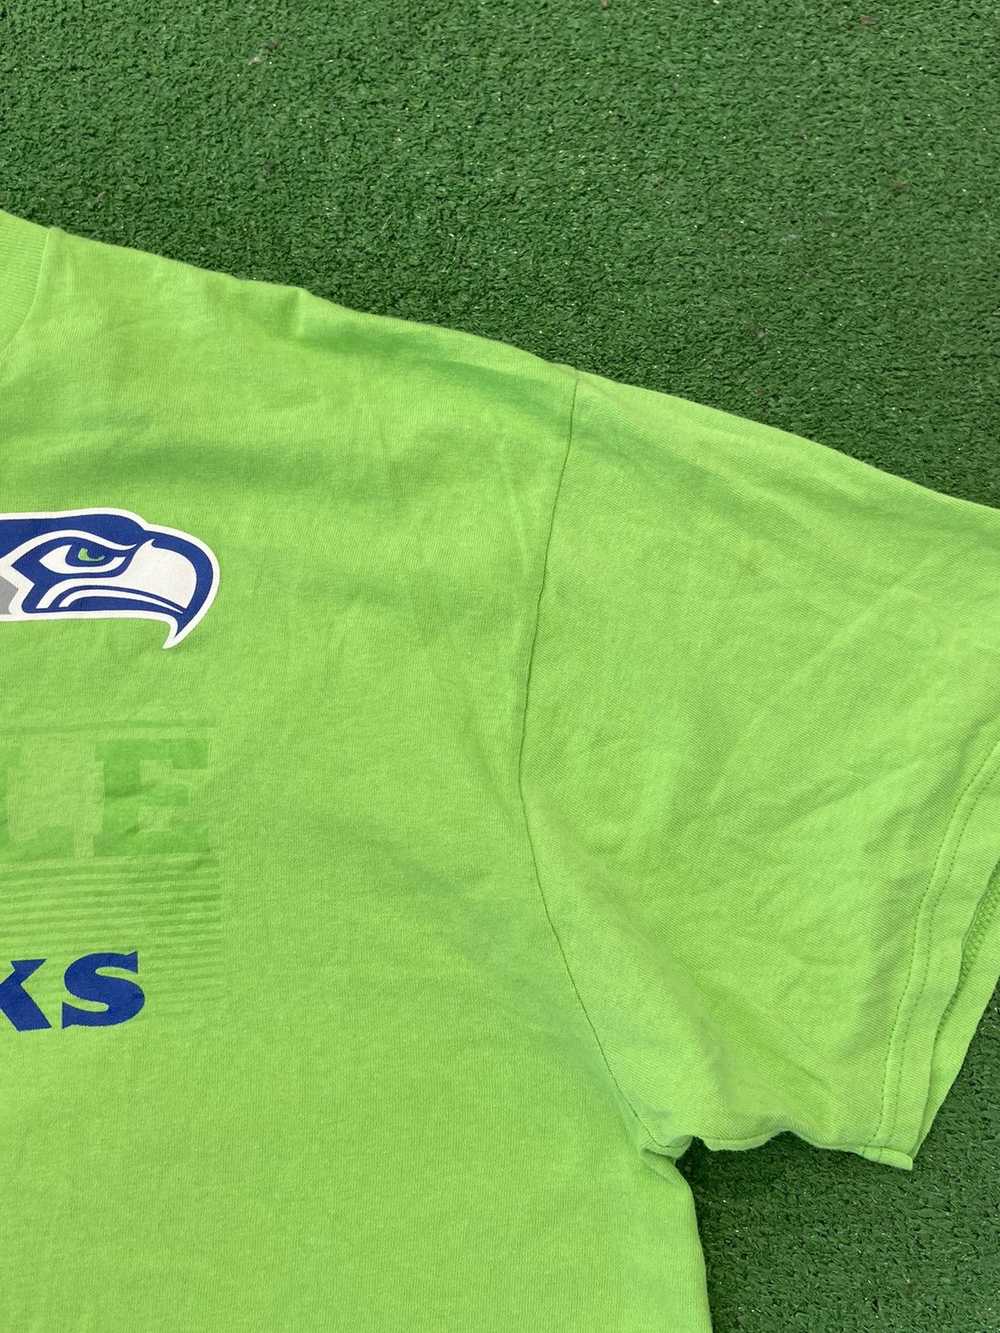 NFL Seattle seahawks tshirt Jersey nfl - image 4